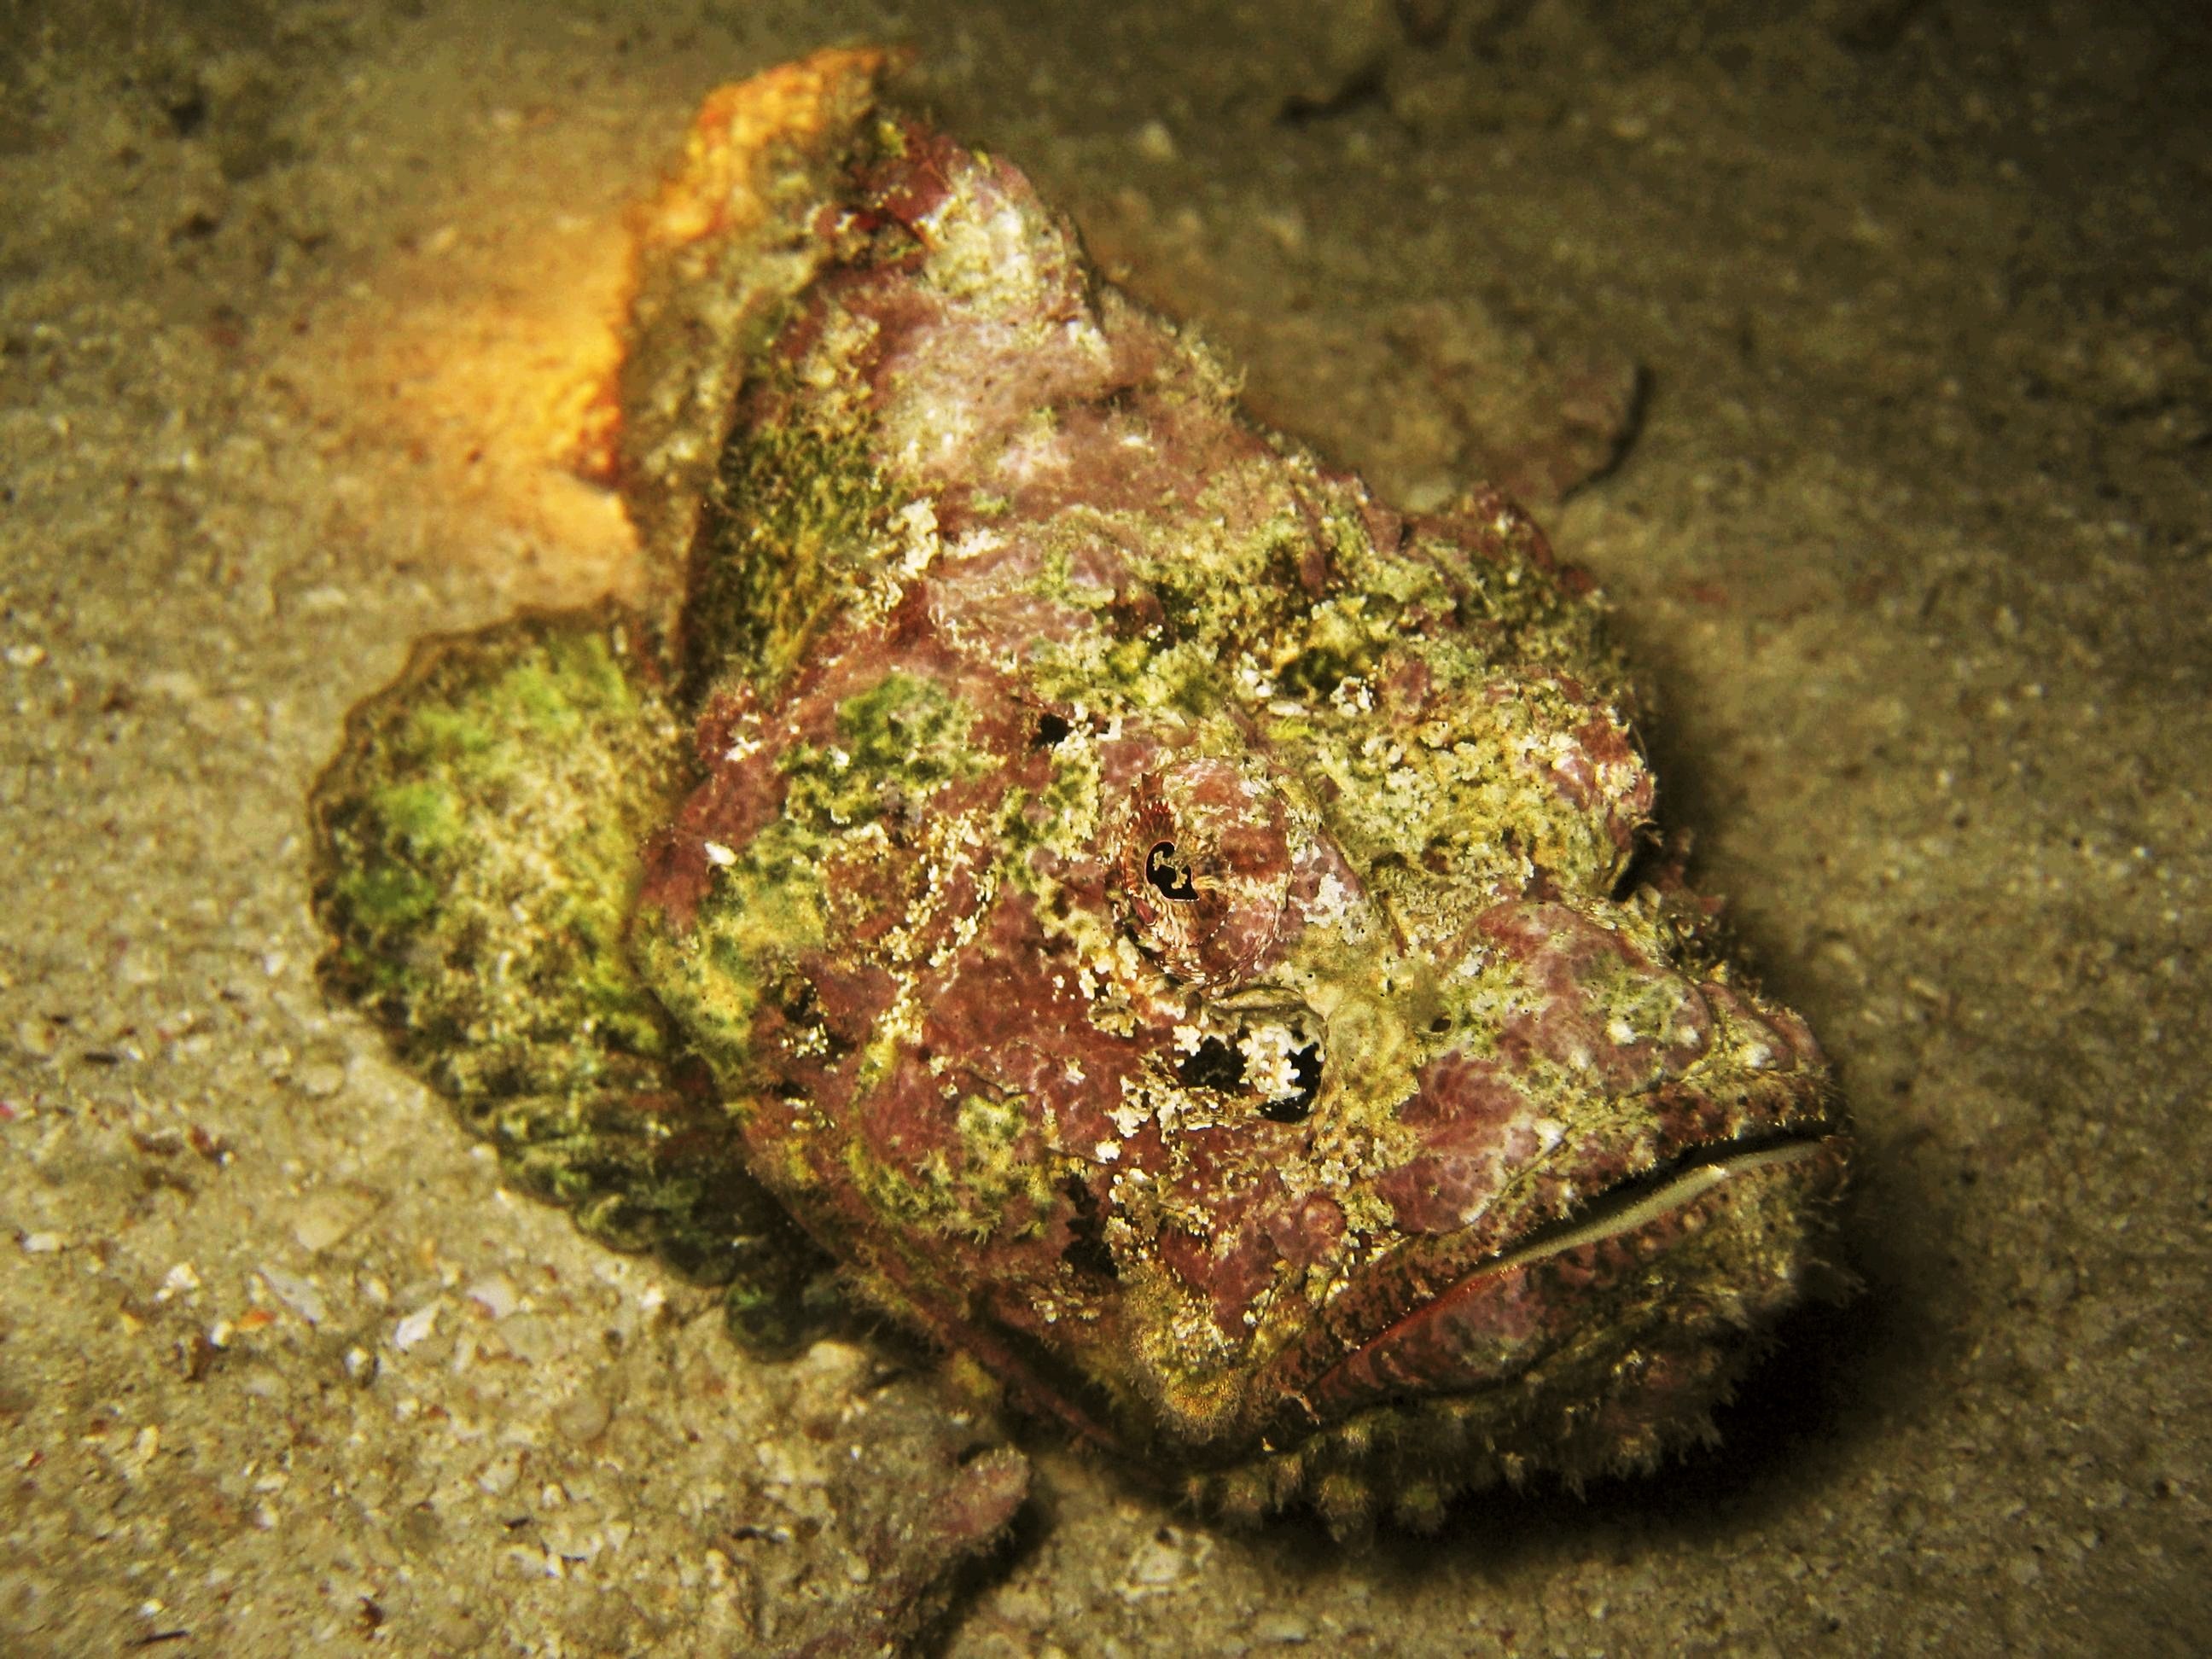 Pretty Reef stonefish